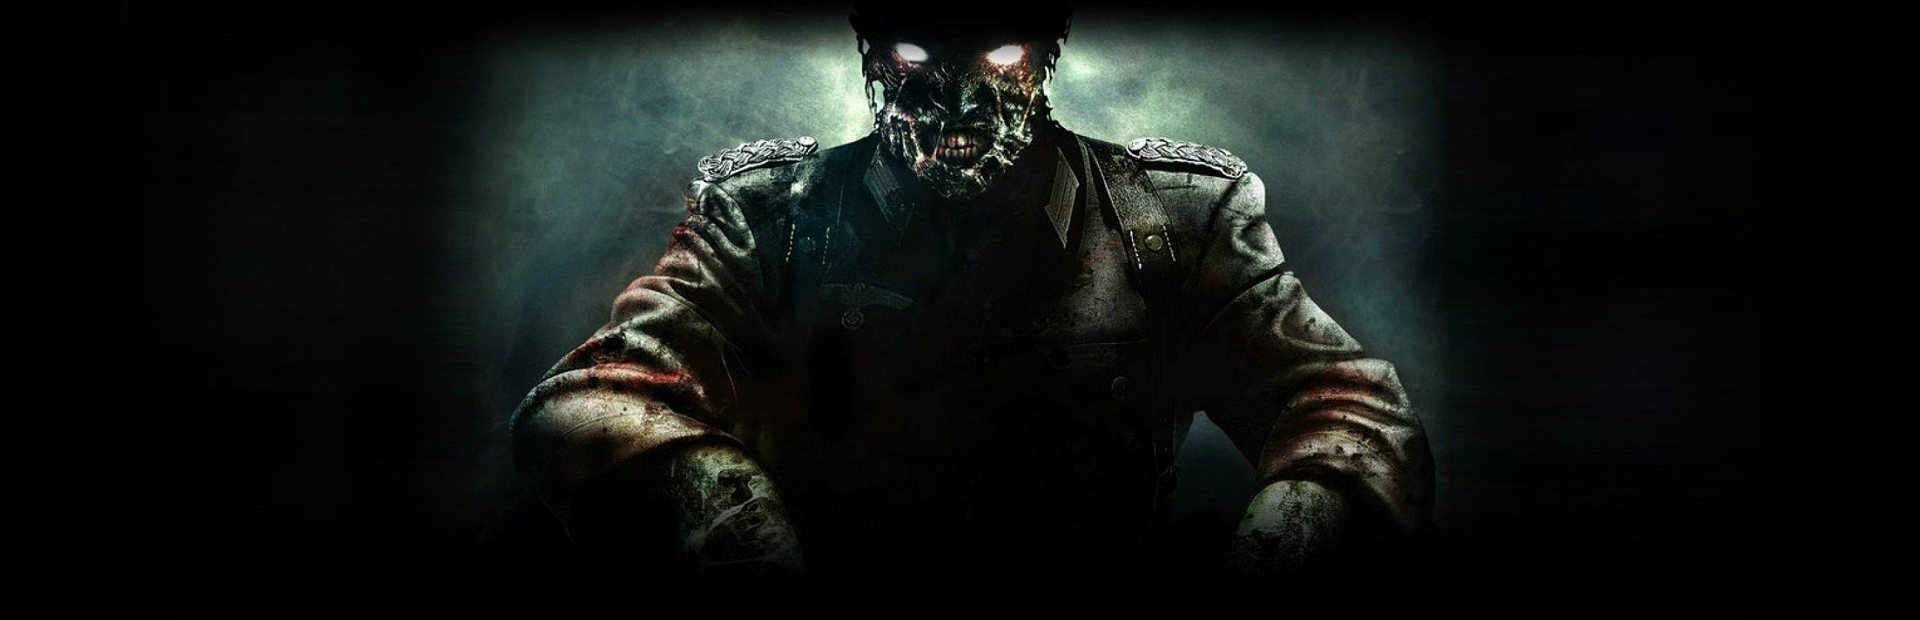 Plutonium: Black Ops II - Zombies - SteamGridDB